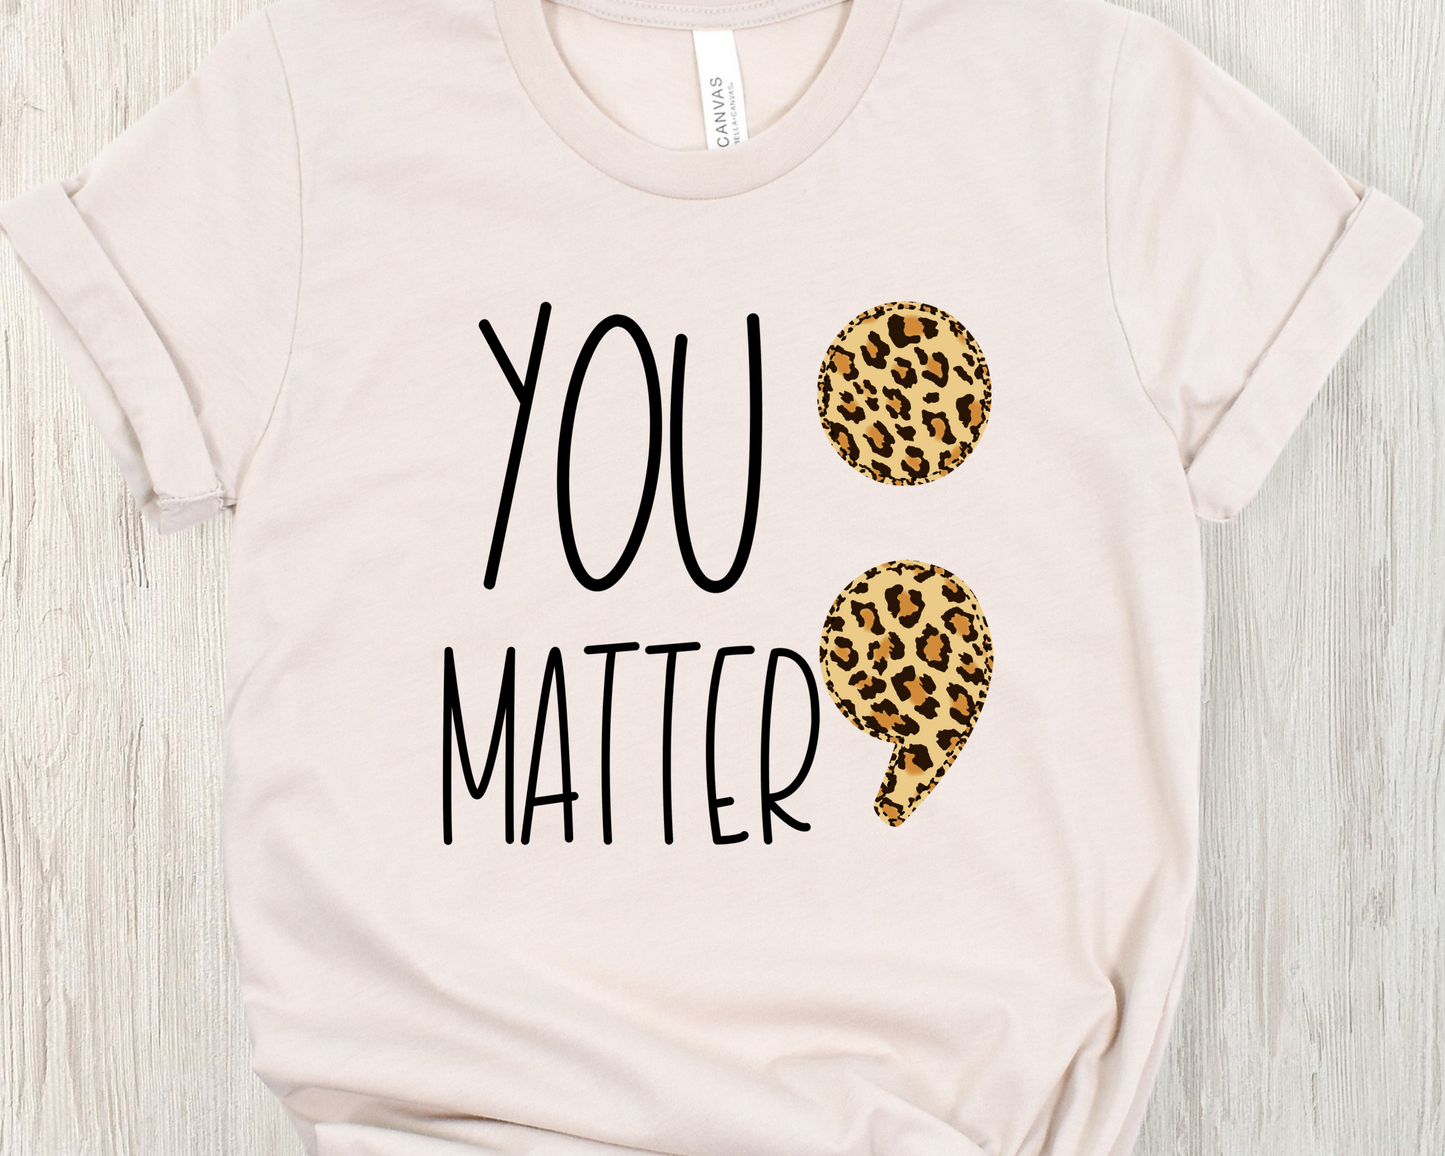 You matter ;-DTF